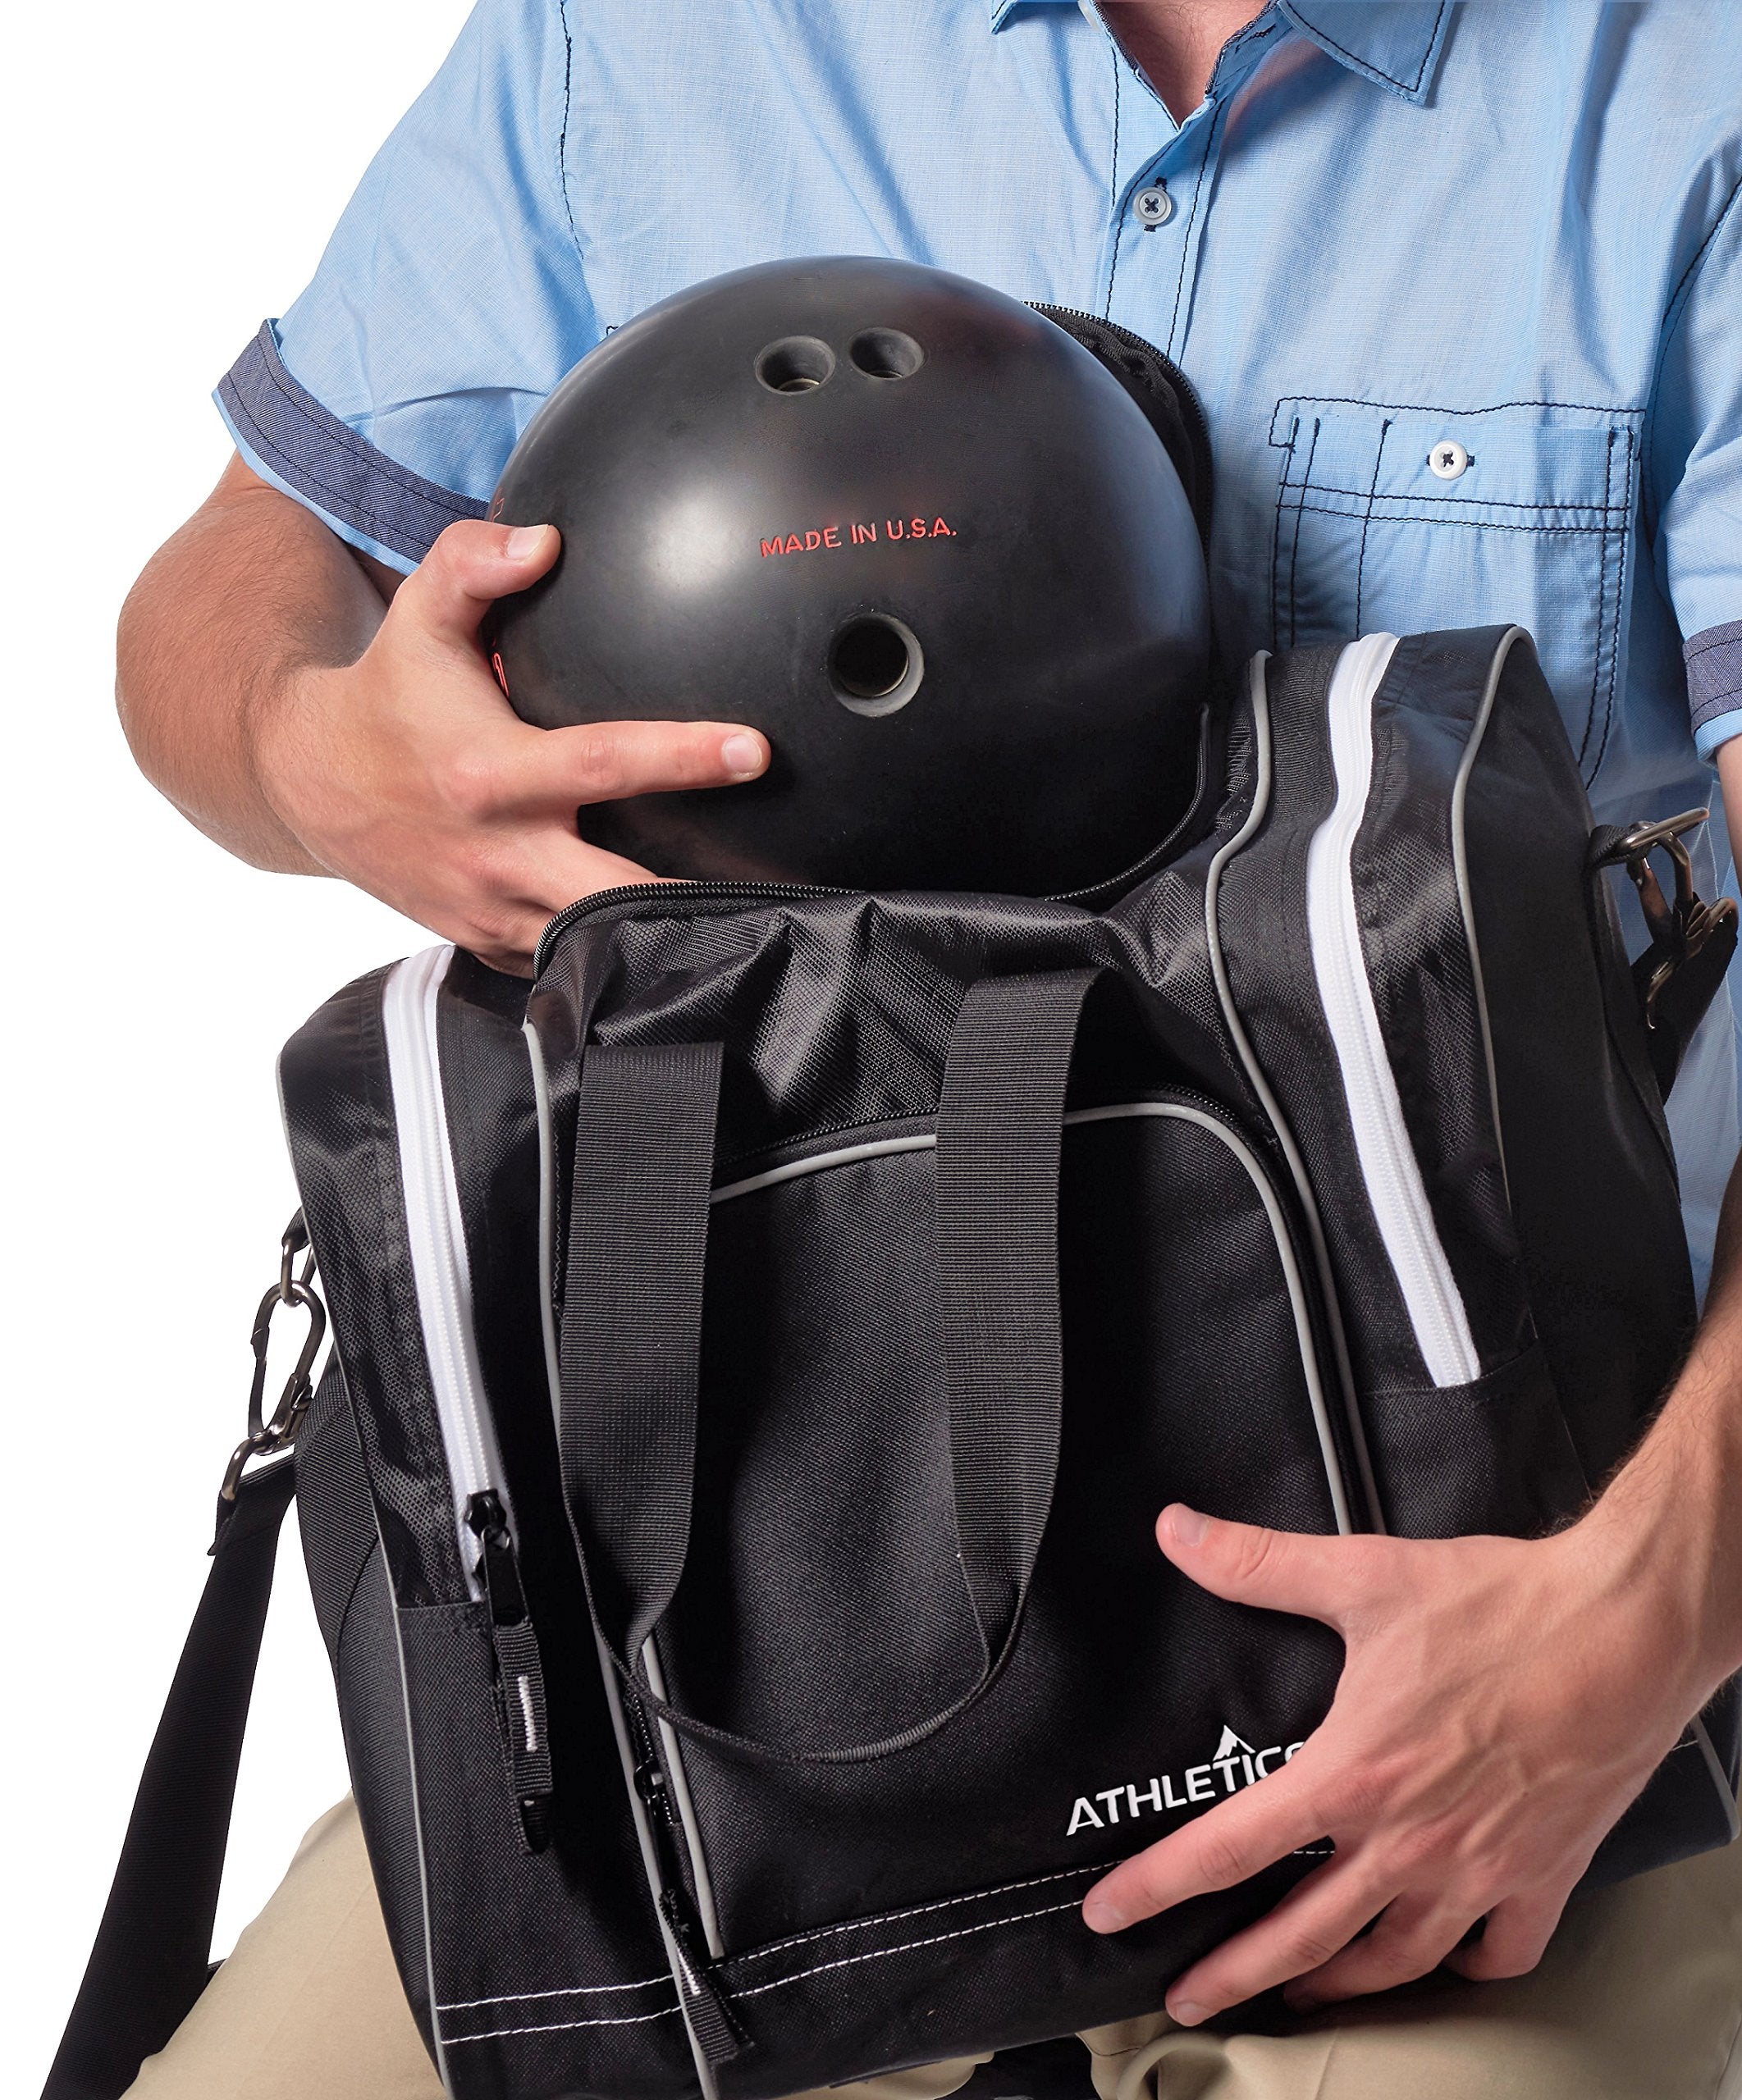 Athletico Bowling Bag & Seesaw Polisher Bundle  - Like New